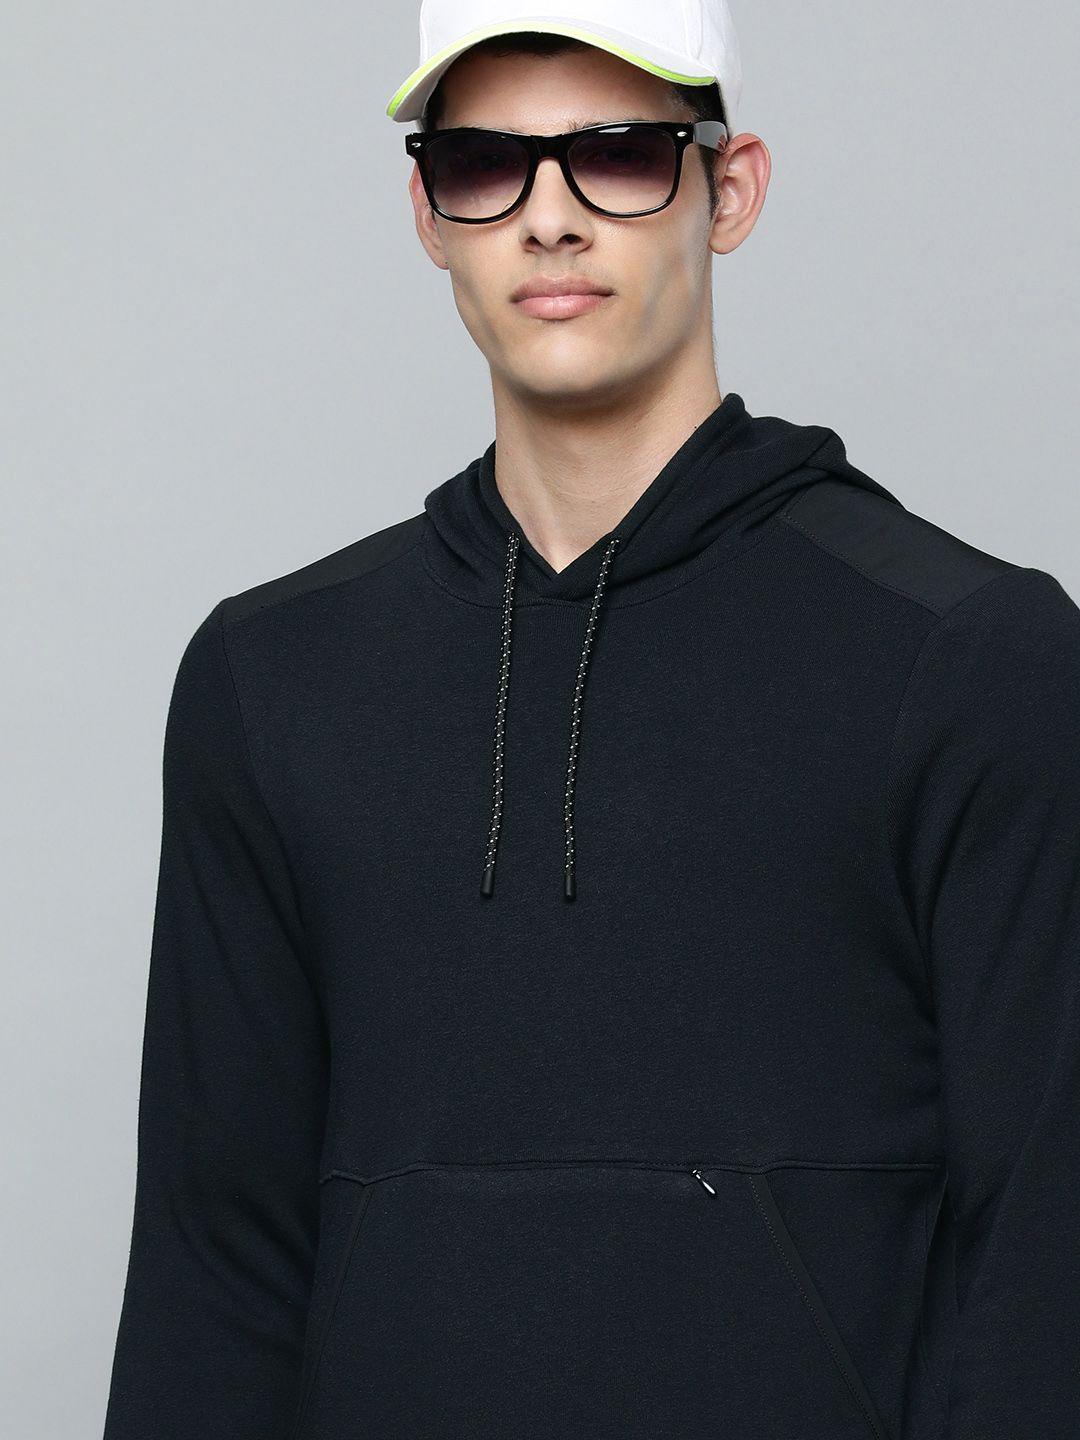 skechers men black solid sweats utility hooded sweatshirt